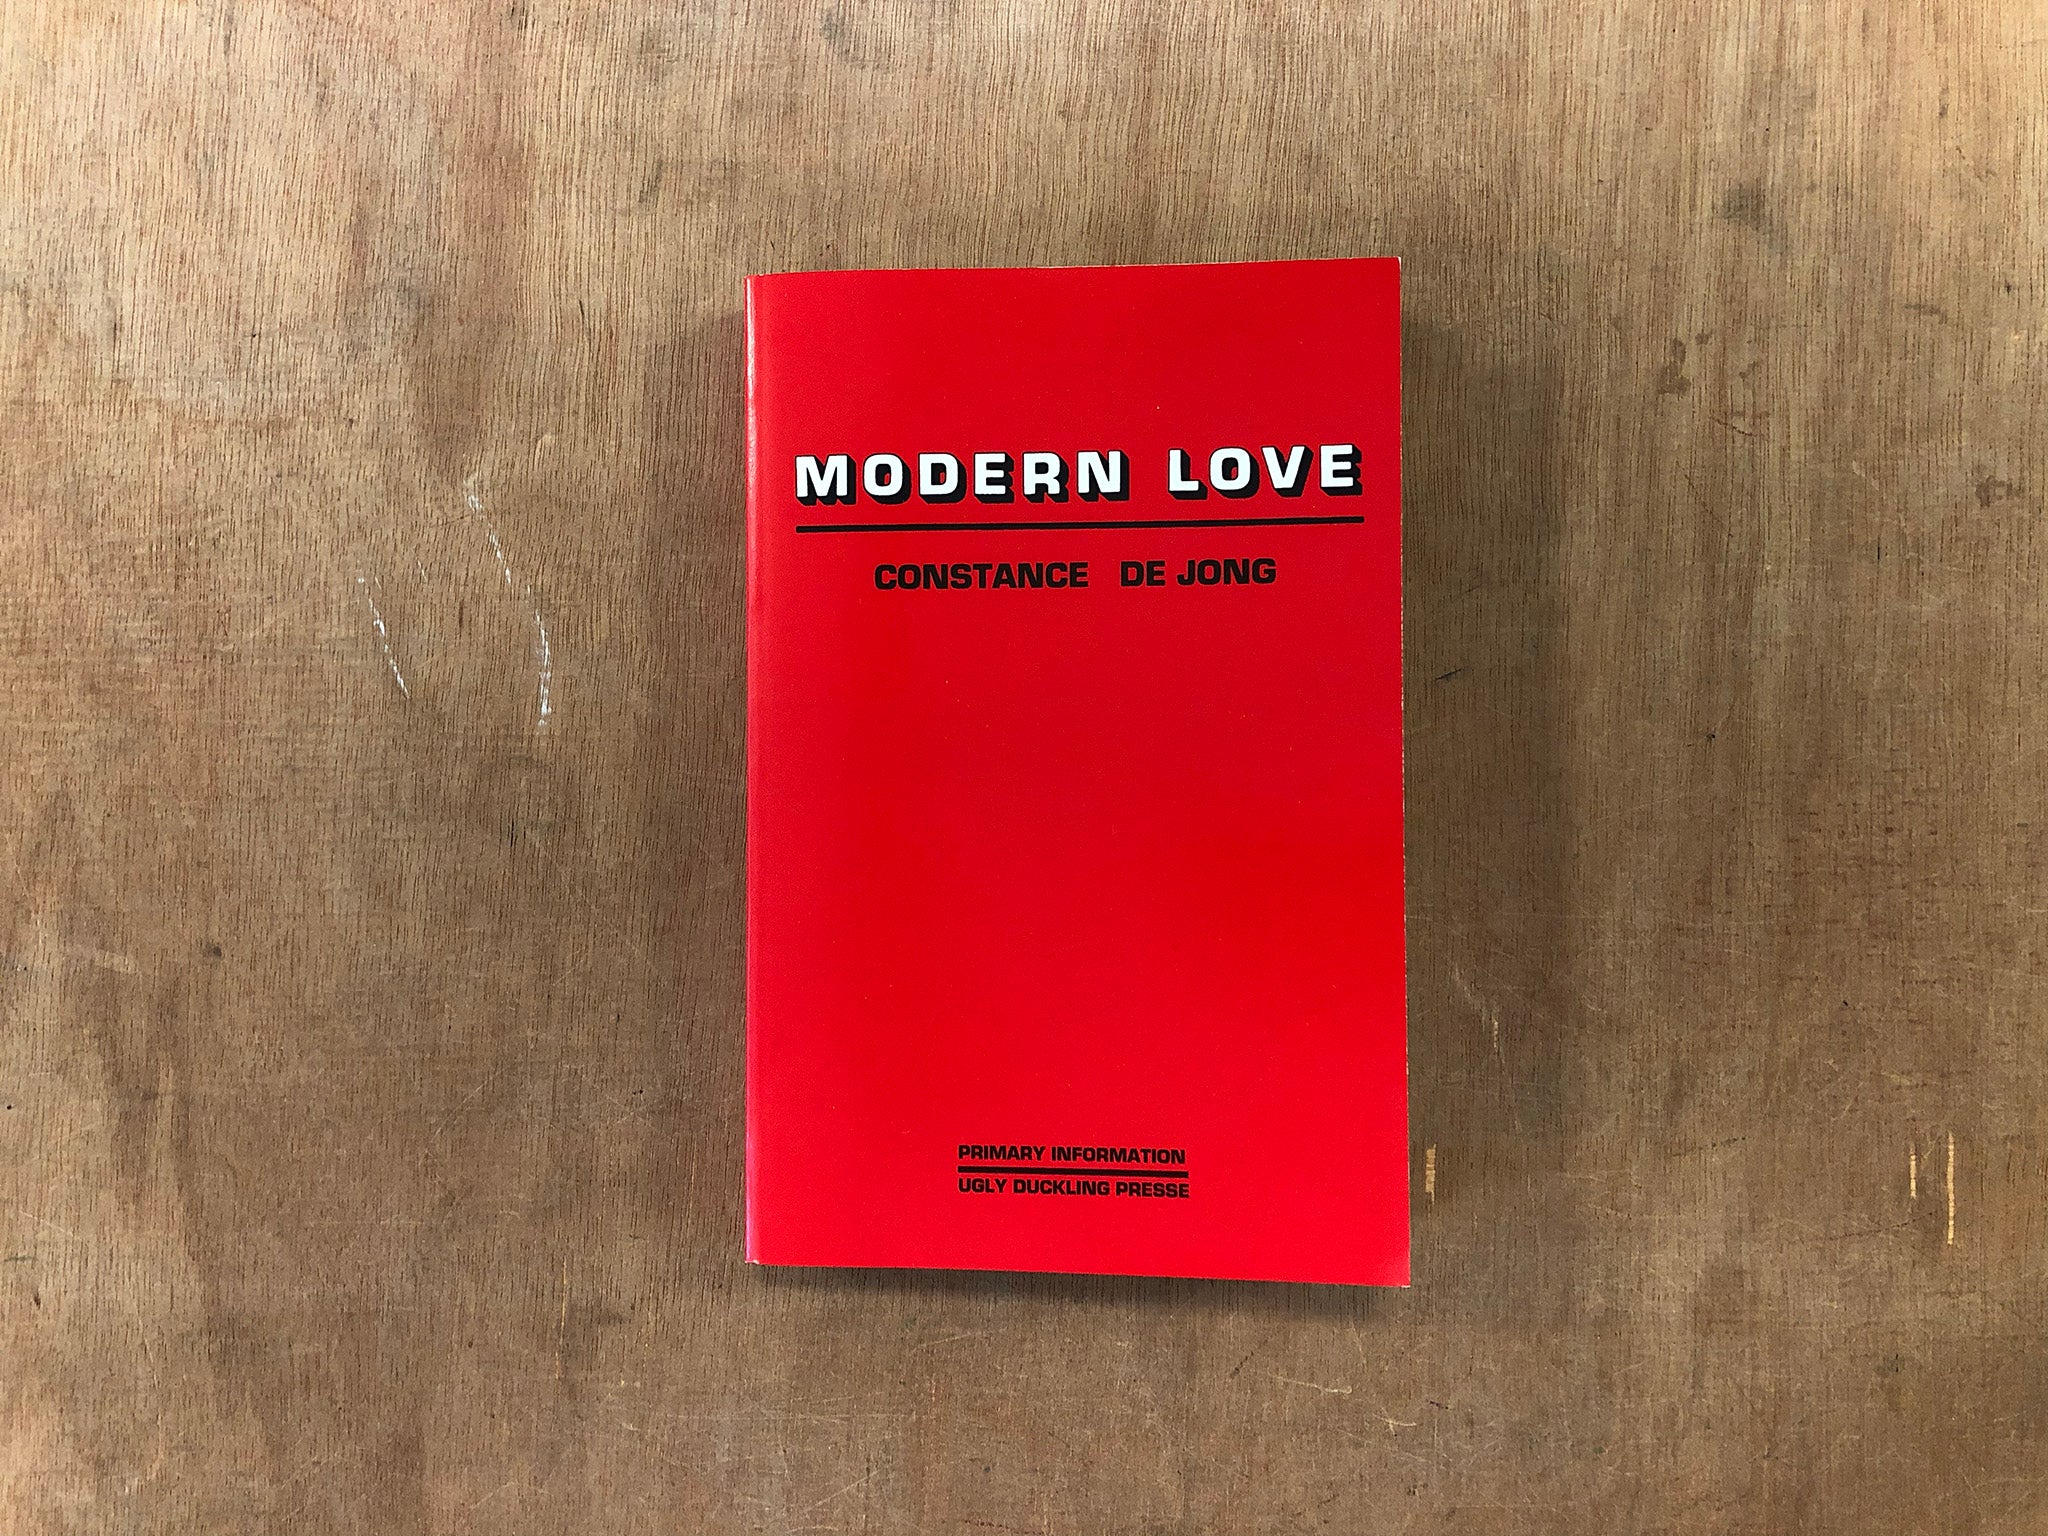 MODERN LOVE by Constance DeJong